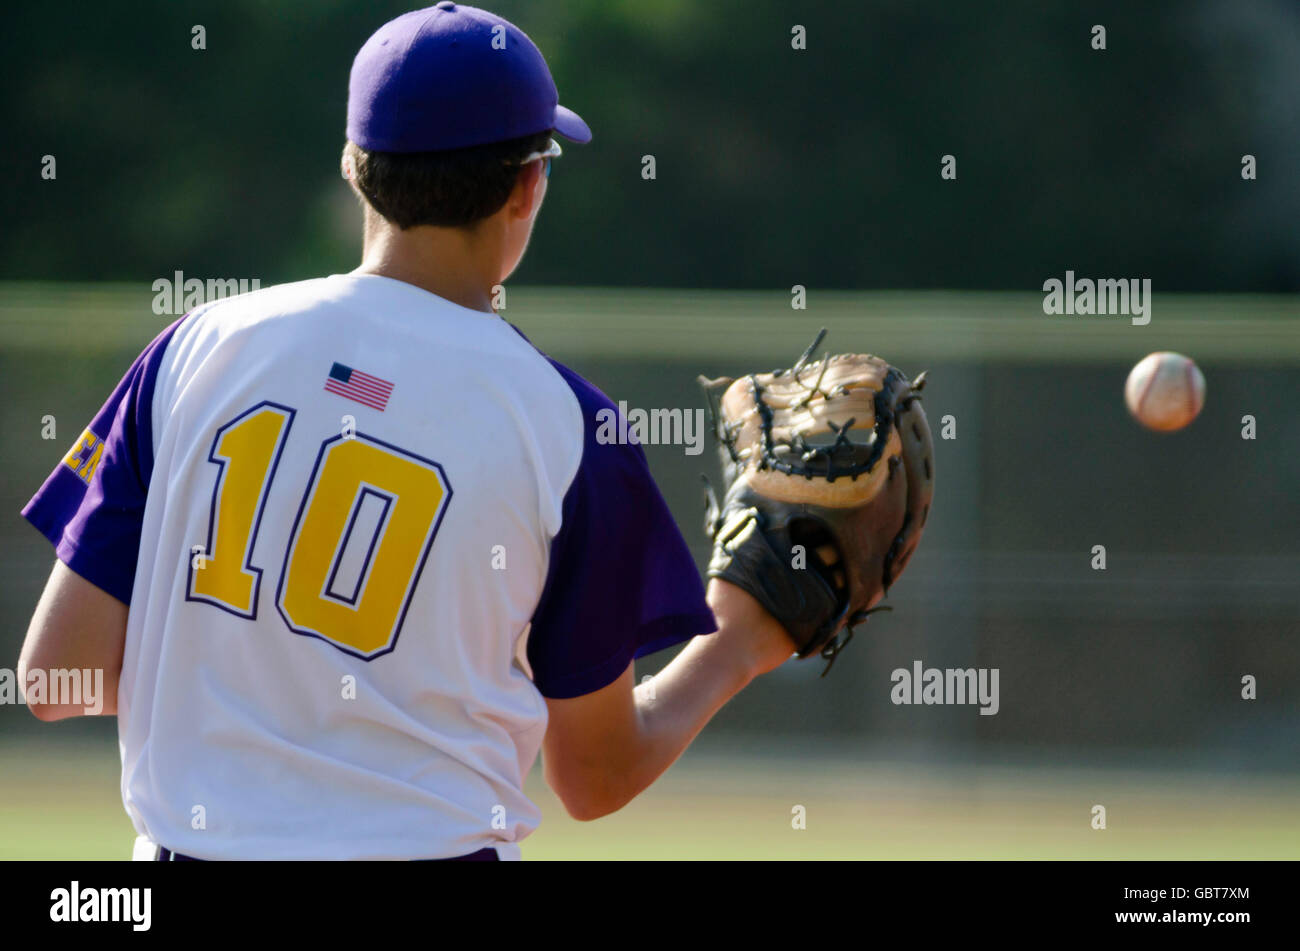 baseball player catching ball Stock Photo